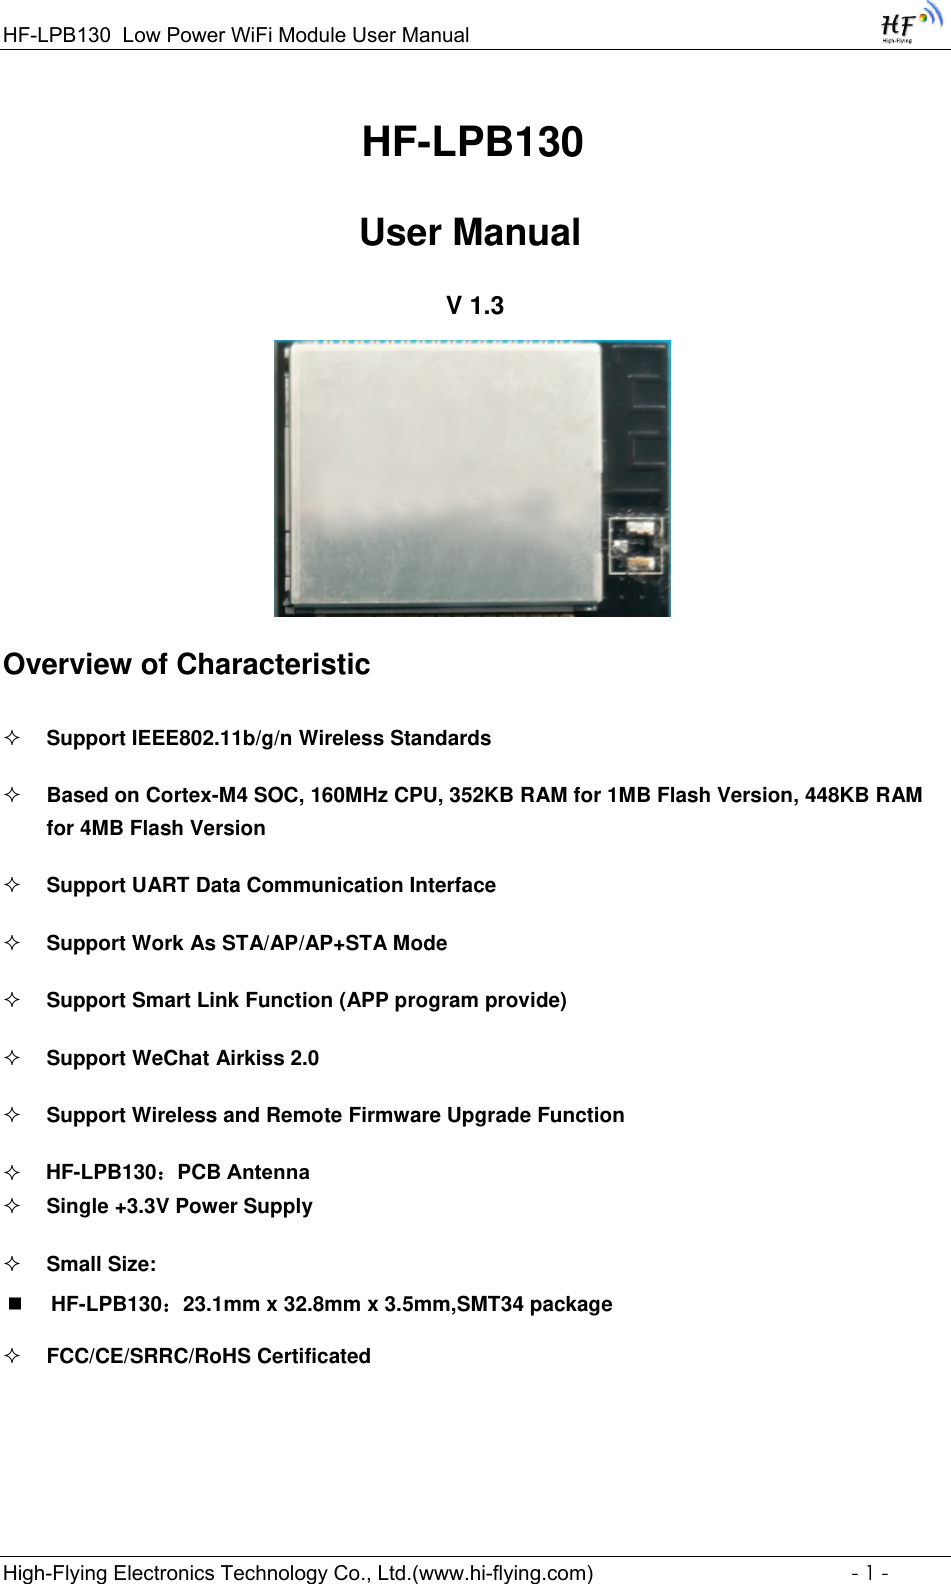 Page 1 of High Flying Electronics Technology HF-LPB130 Wi-Fi Module User Manual GPON SFU System Design